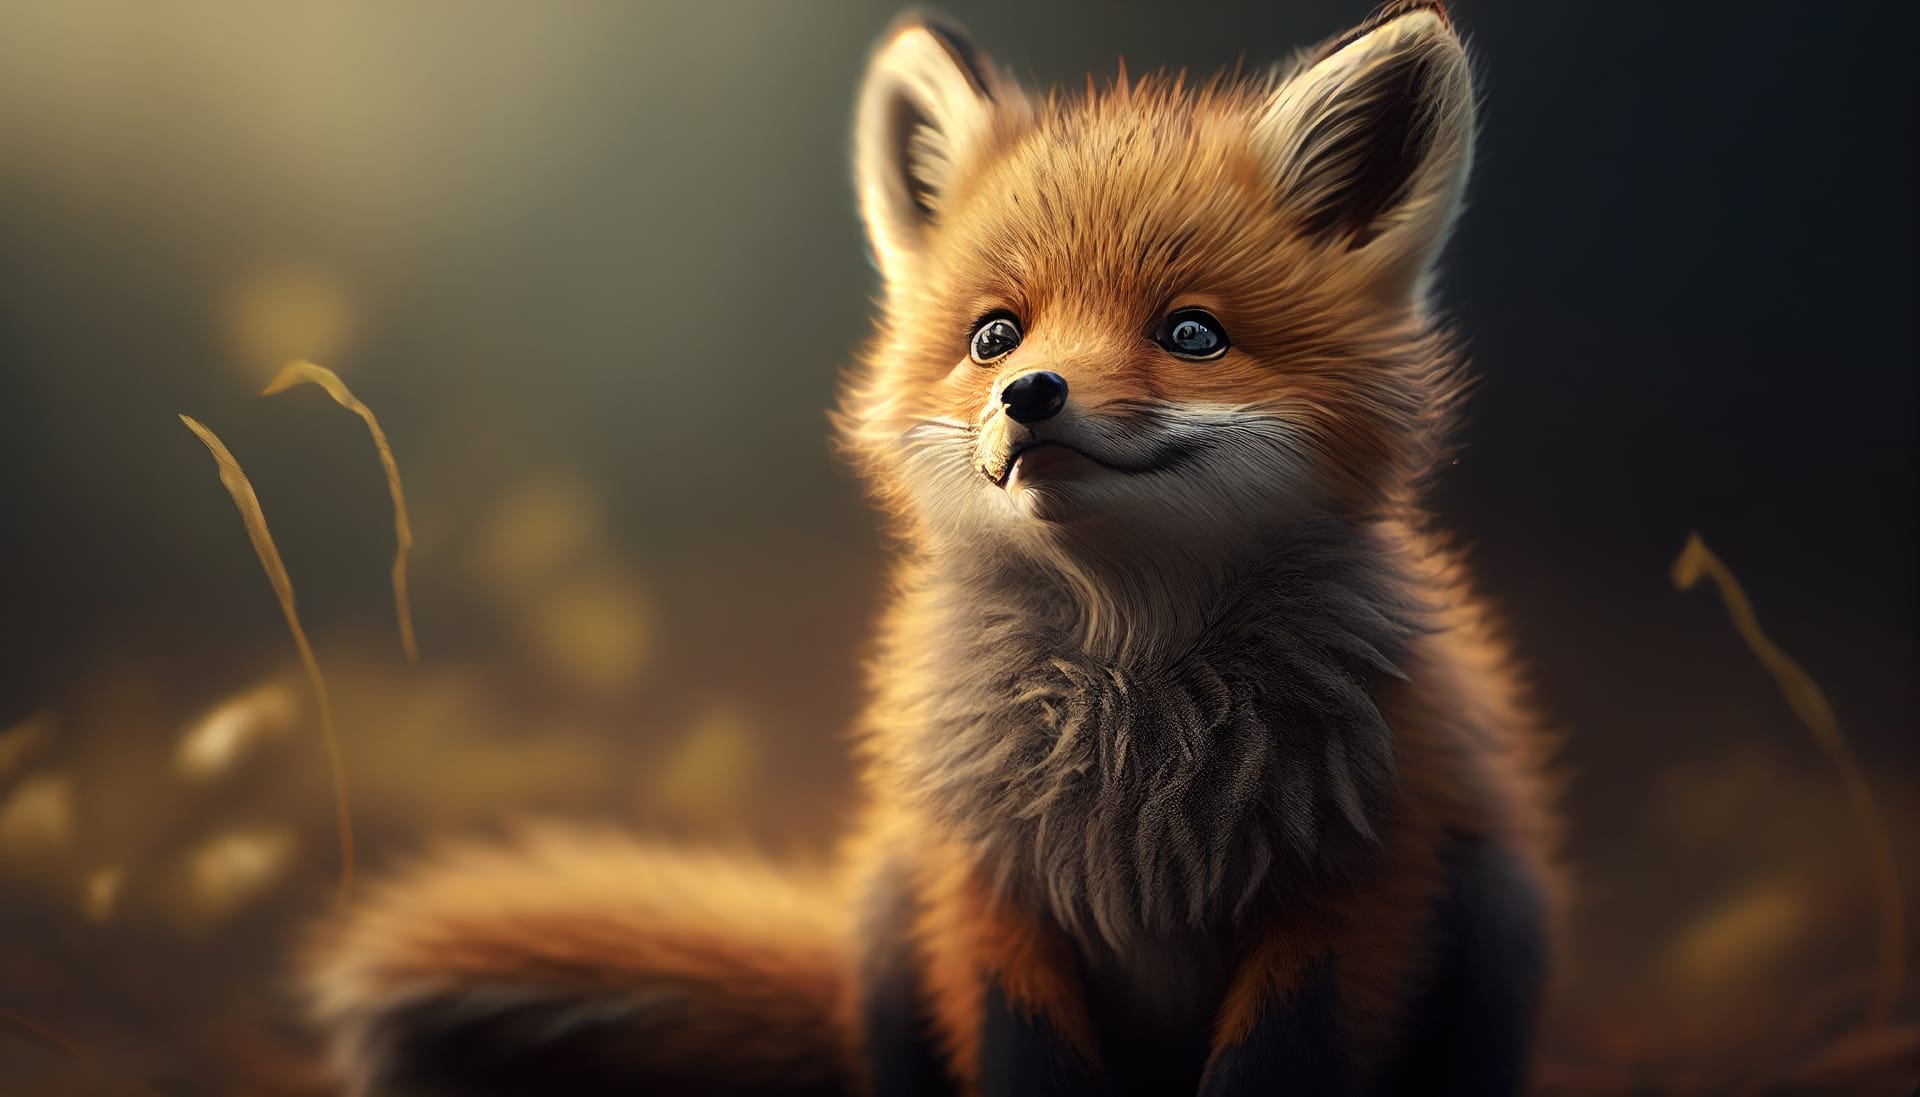 Fox with blue eye red fur animal image